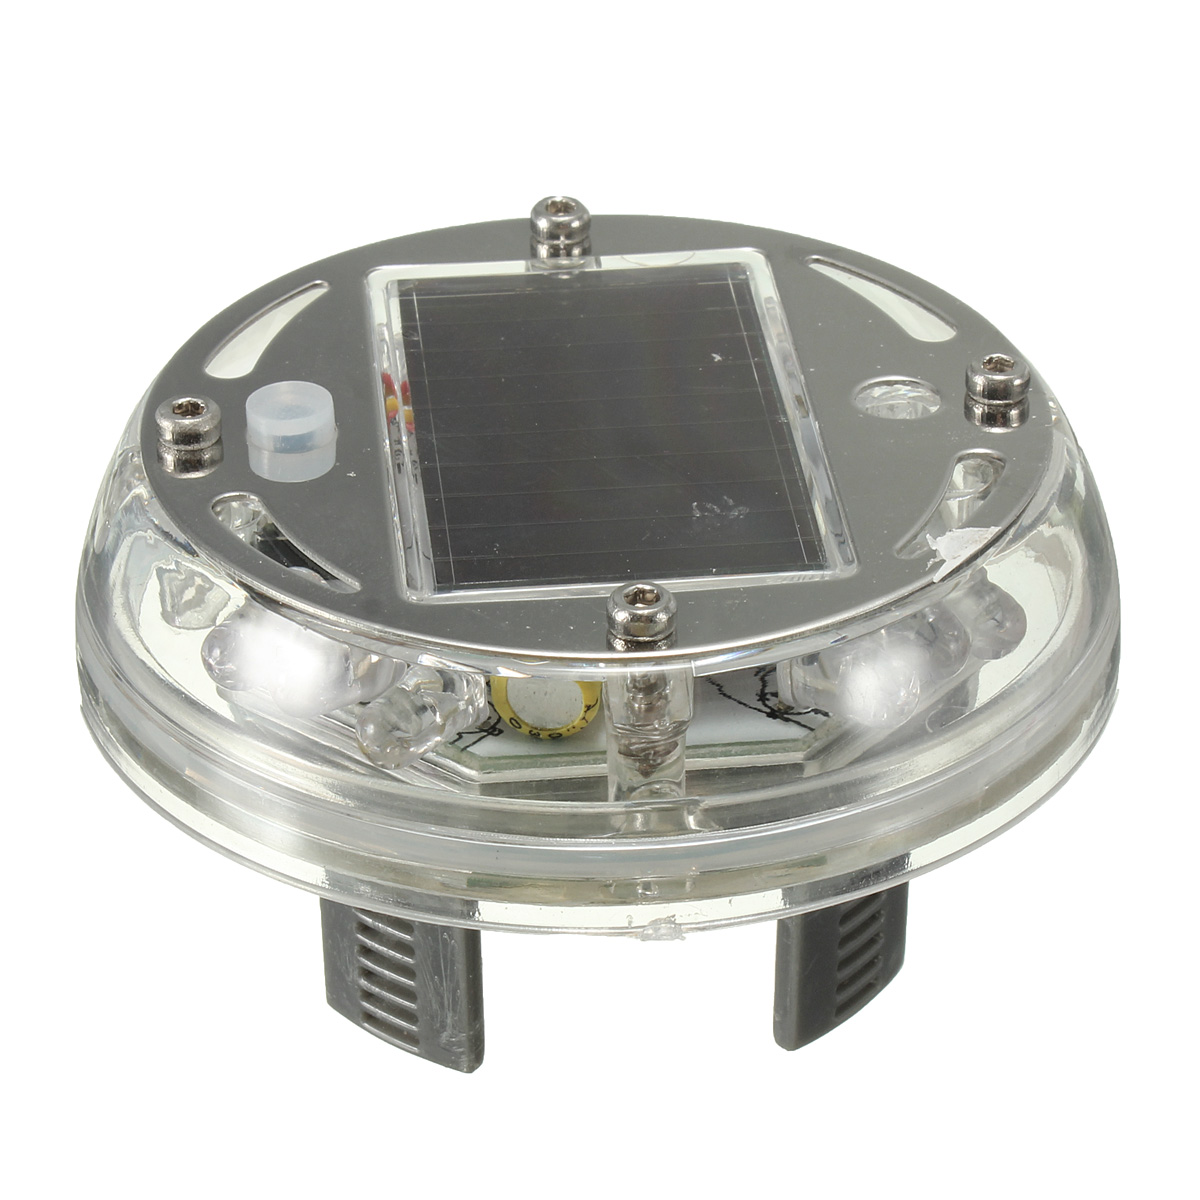 Solar Energy LED Car Wheel Tire Rim Flash Light Decoration Lamp 4 Flashing Modes - Auto GoShop